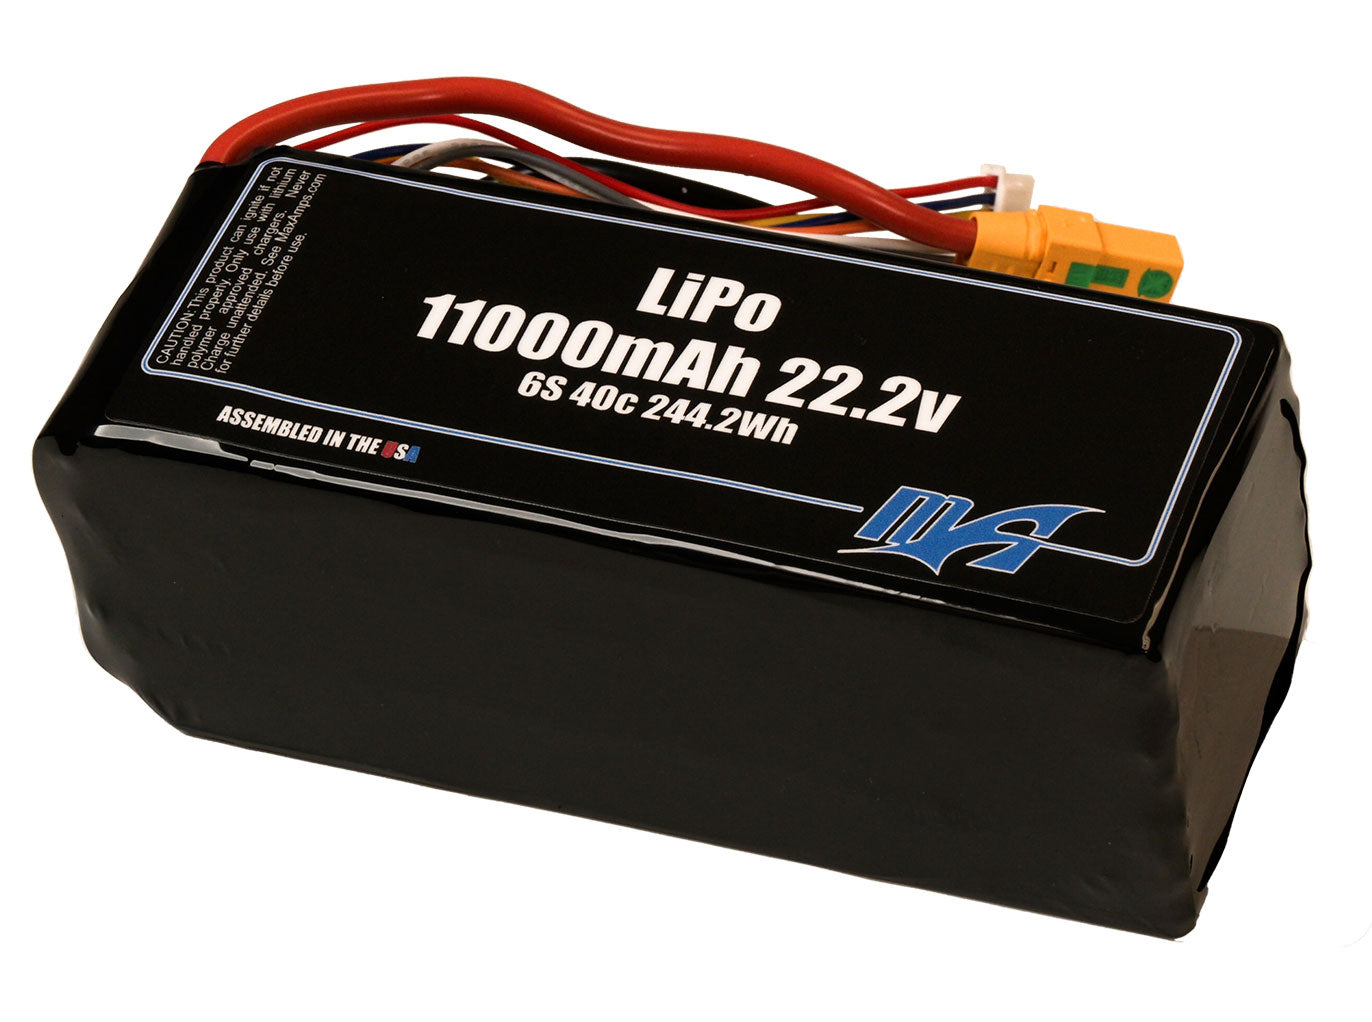 LiPo 11000 6S 22.2v Smart Battery Pack with XT90 Anti-Spark Female